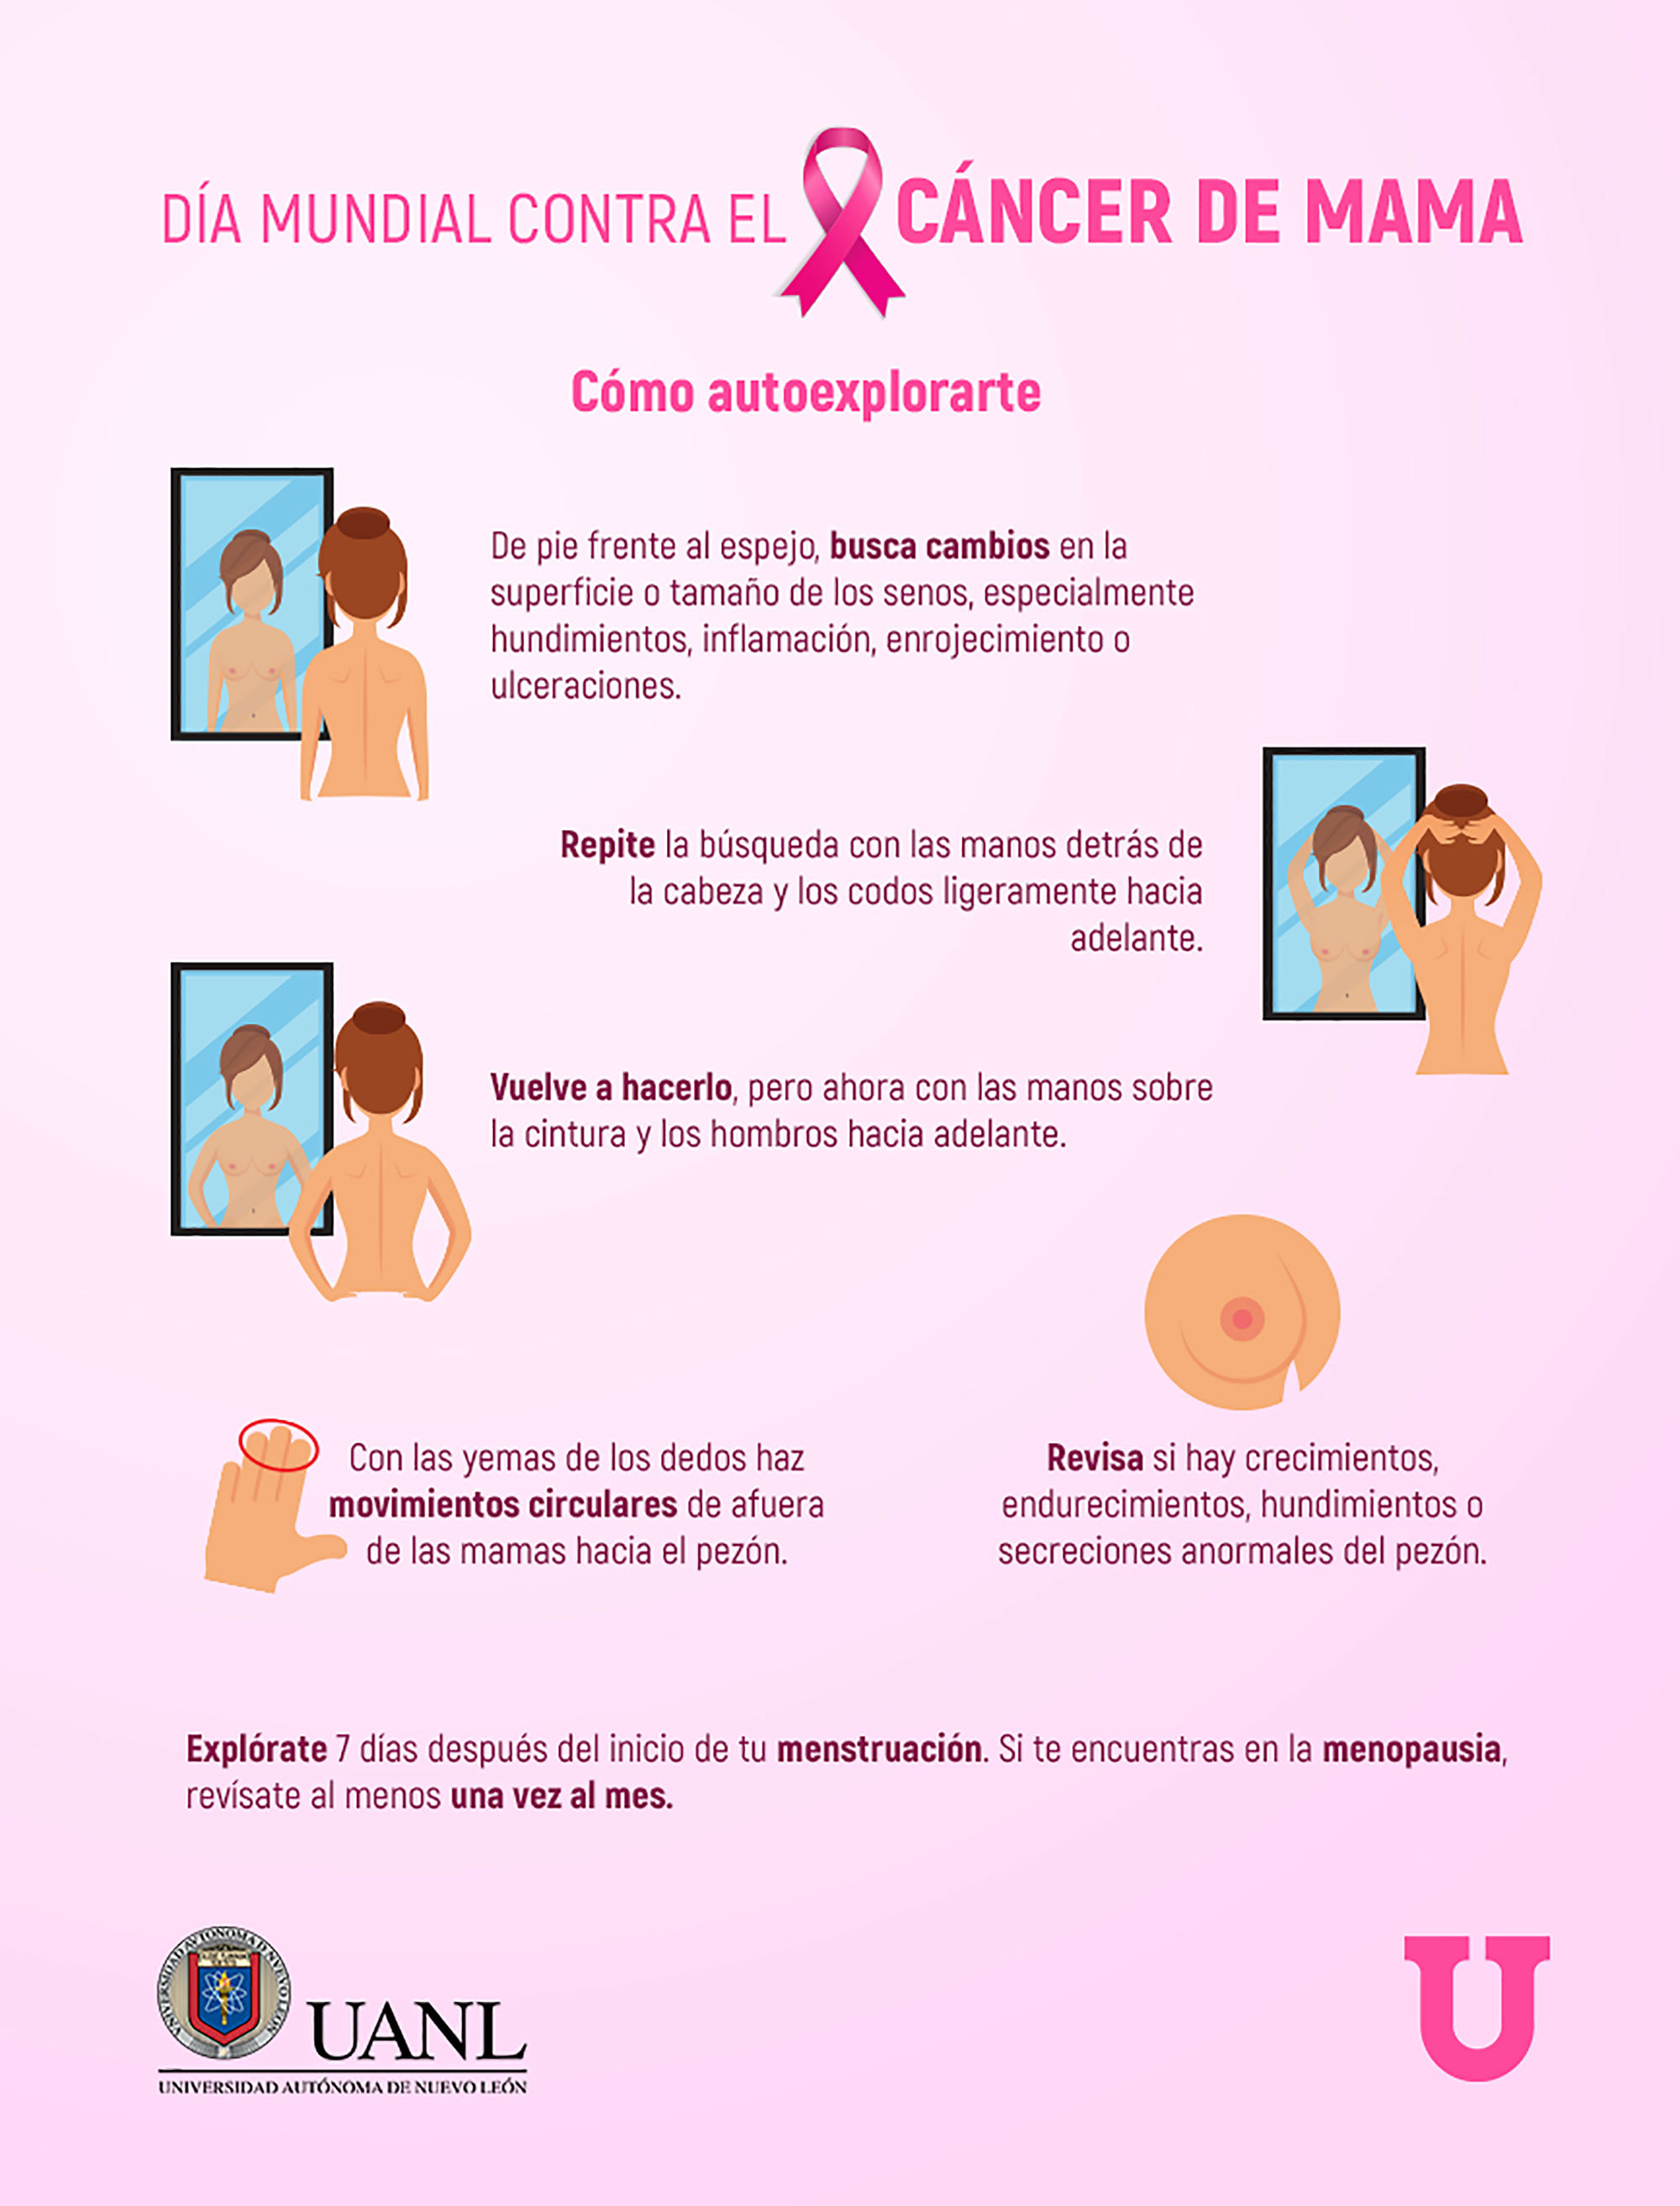 https://bcdn.lanetaneta.com/wp-content/uploads/2021/10/Crece-incidencia-de-cancer-de-mama-en-mujeres-jovenes-que.jpg